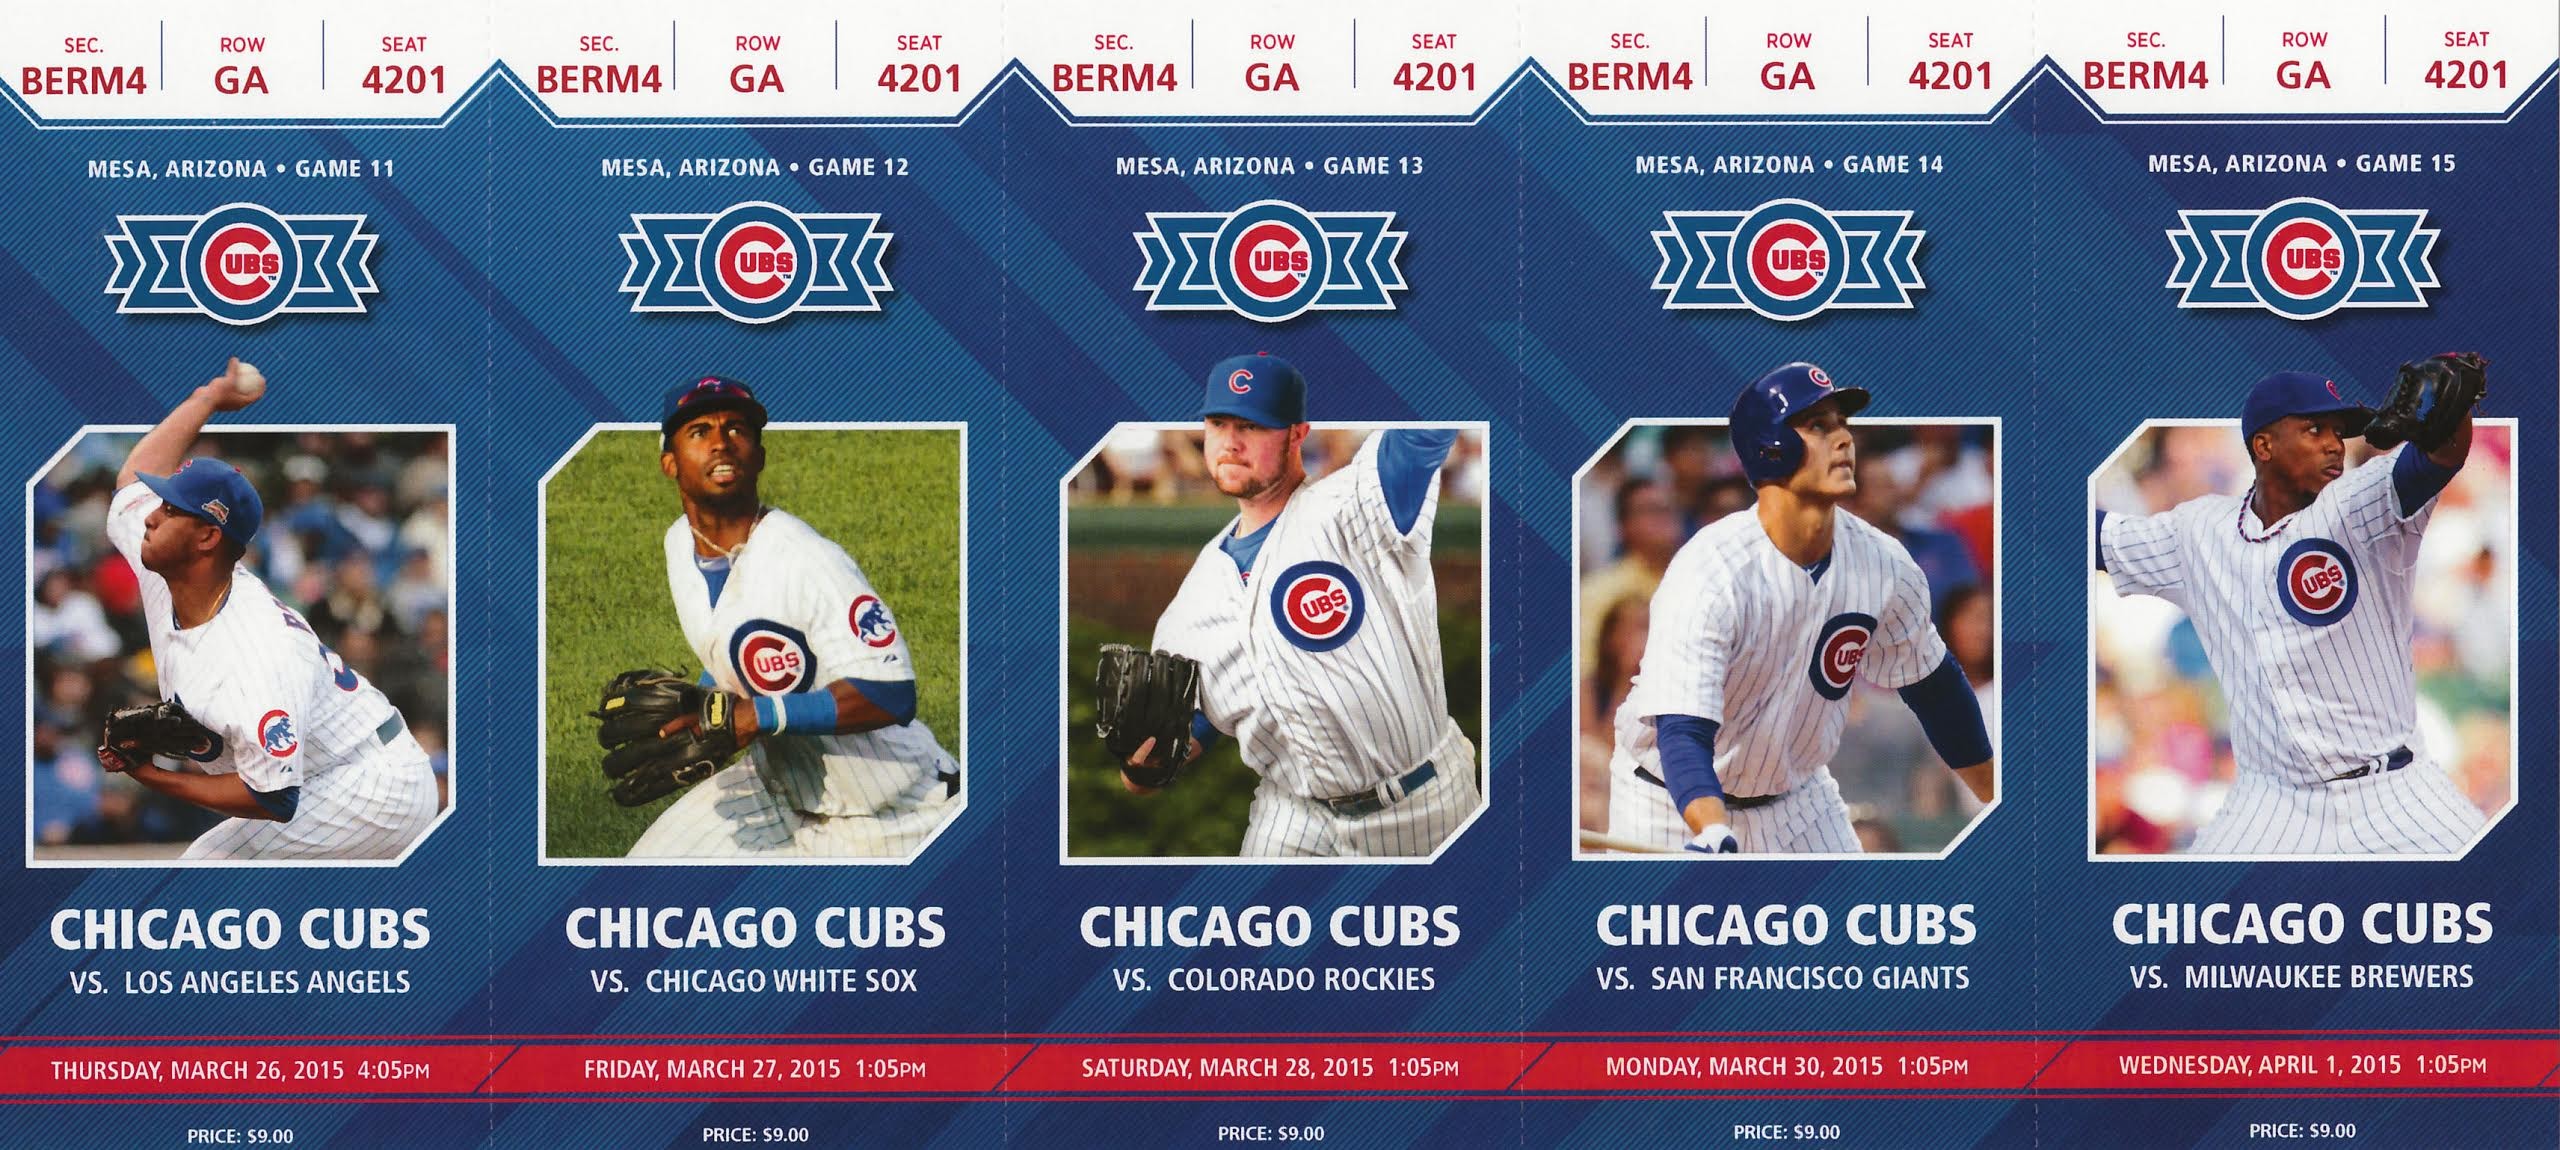 2560x1150 Chicago Cubs 2015 Schedule